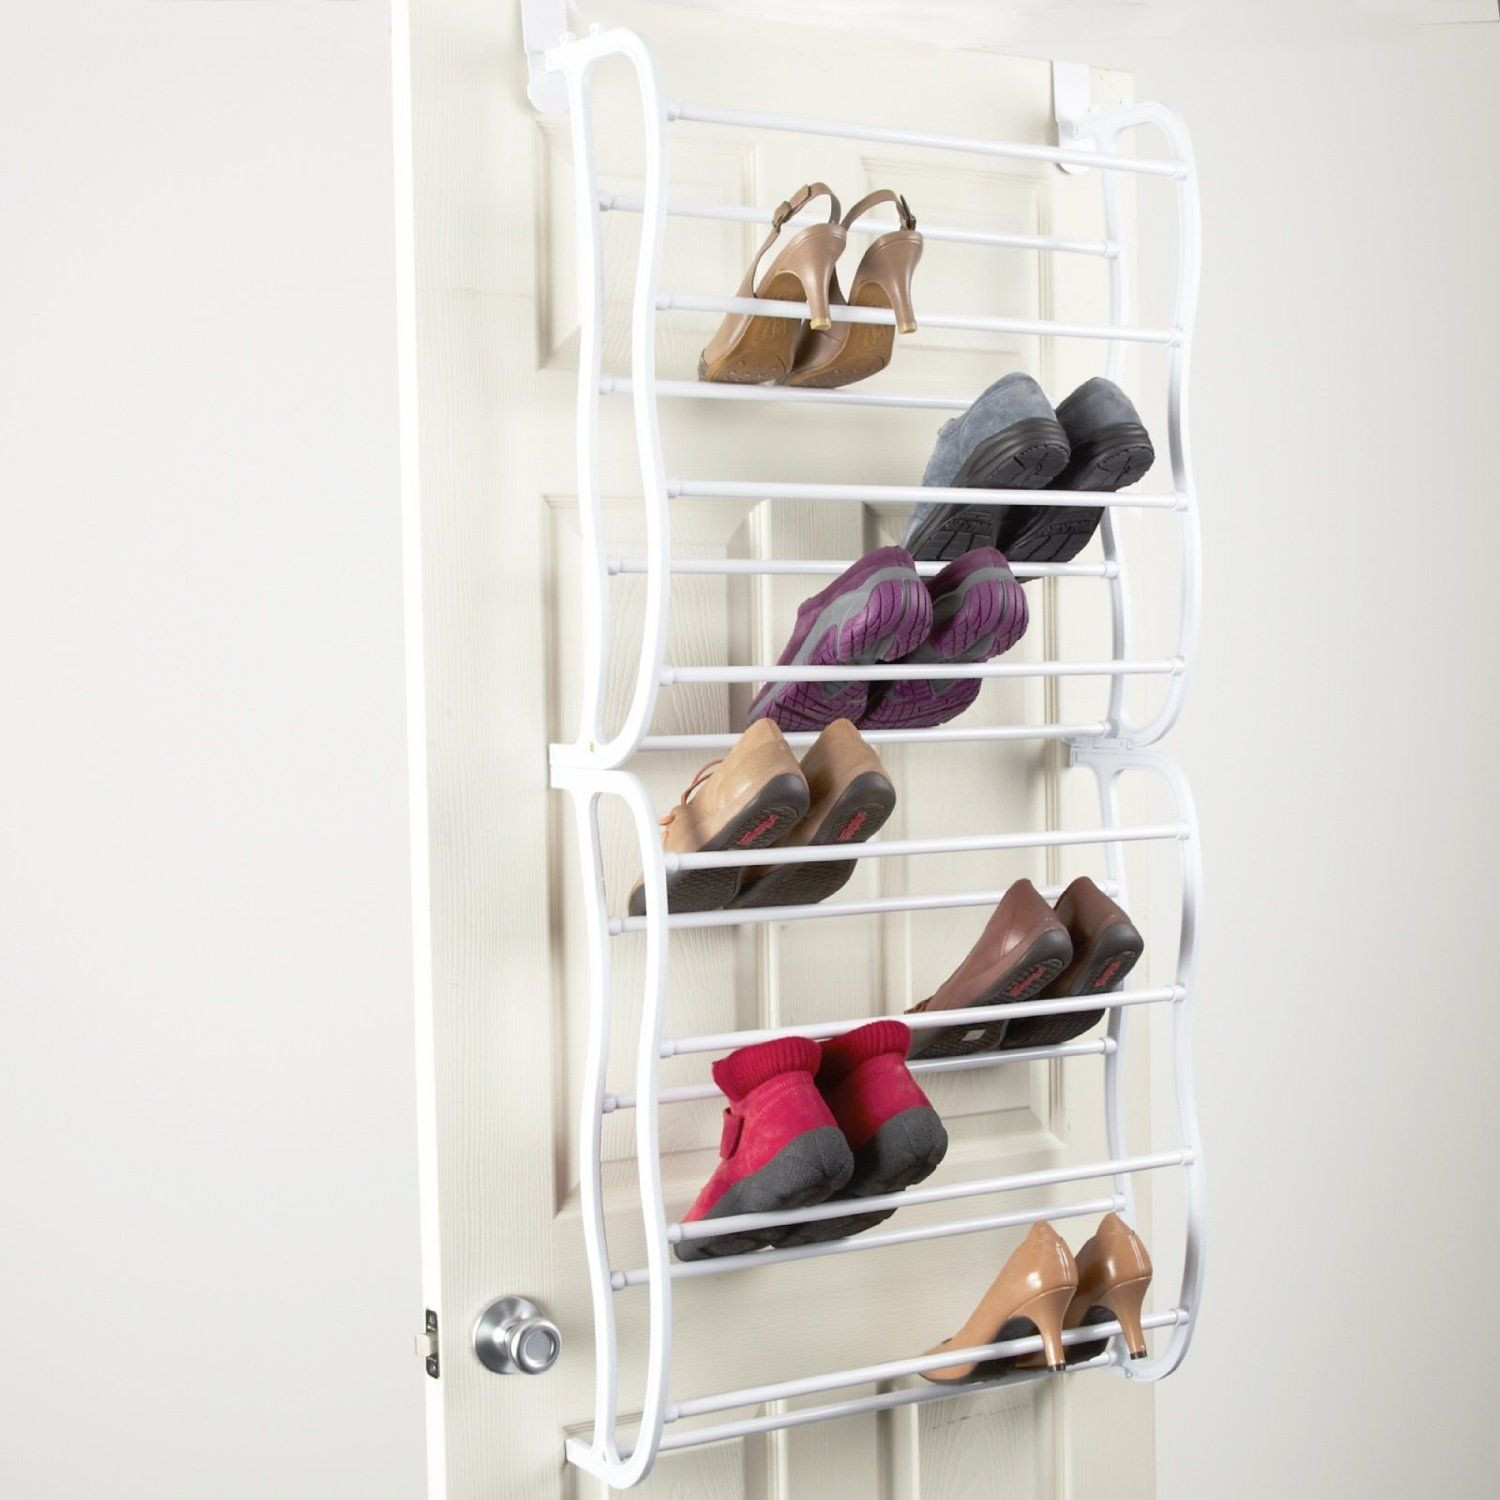 Best ideas about DIY Wall Mounted Shoe Rack
. Save or Pin wall mounted shoe rack ideas Design Now.